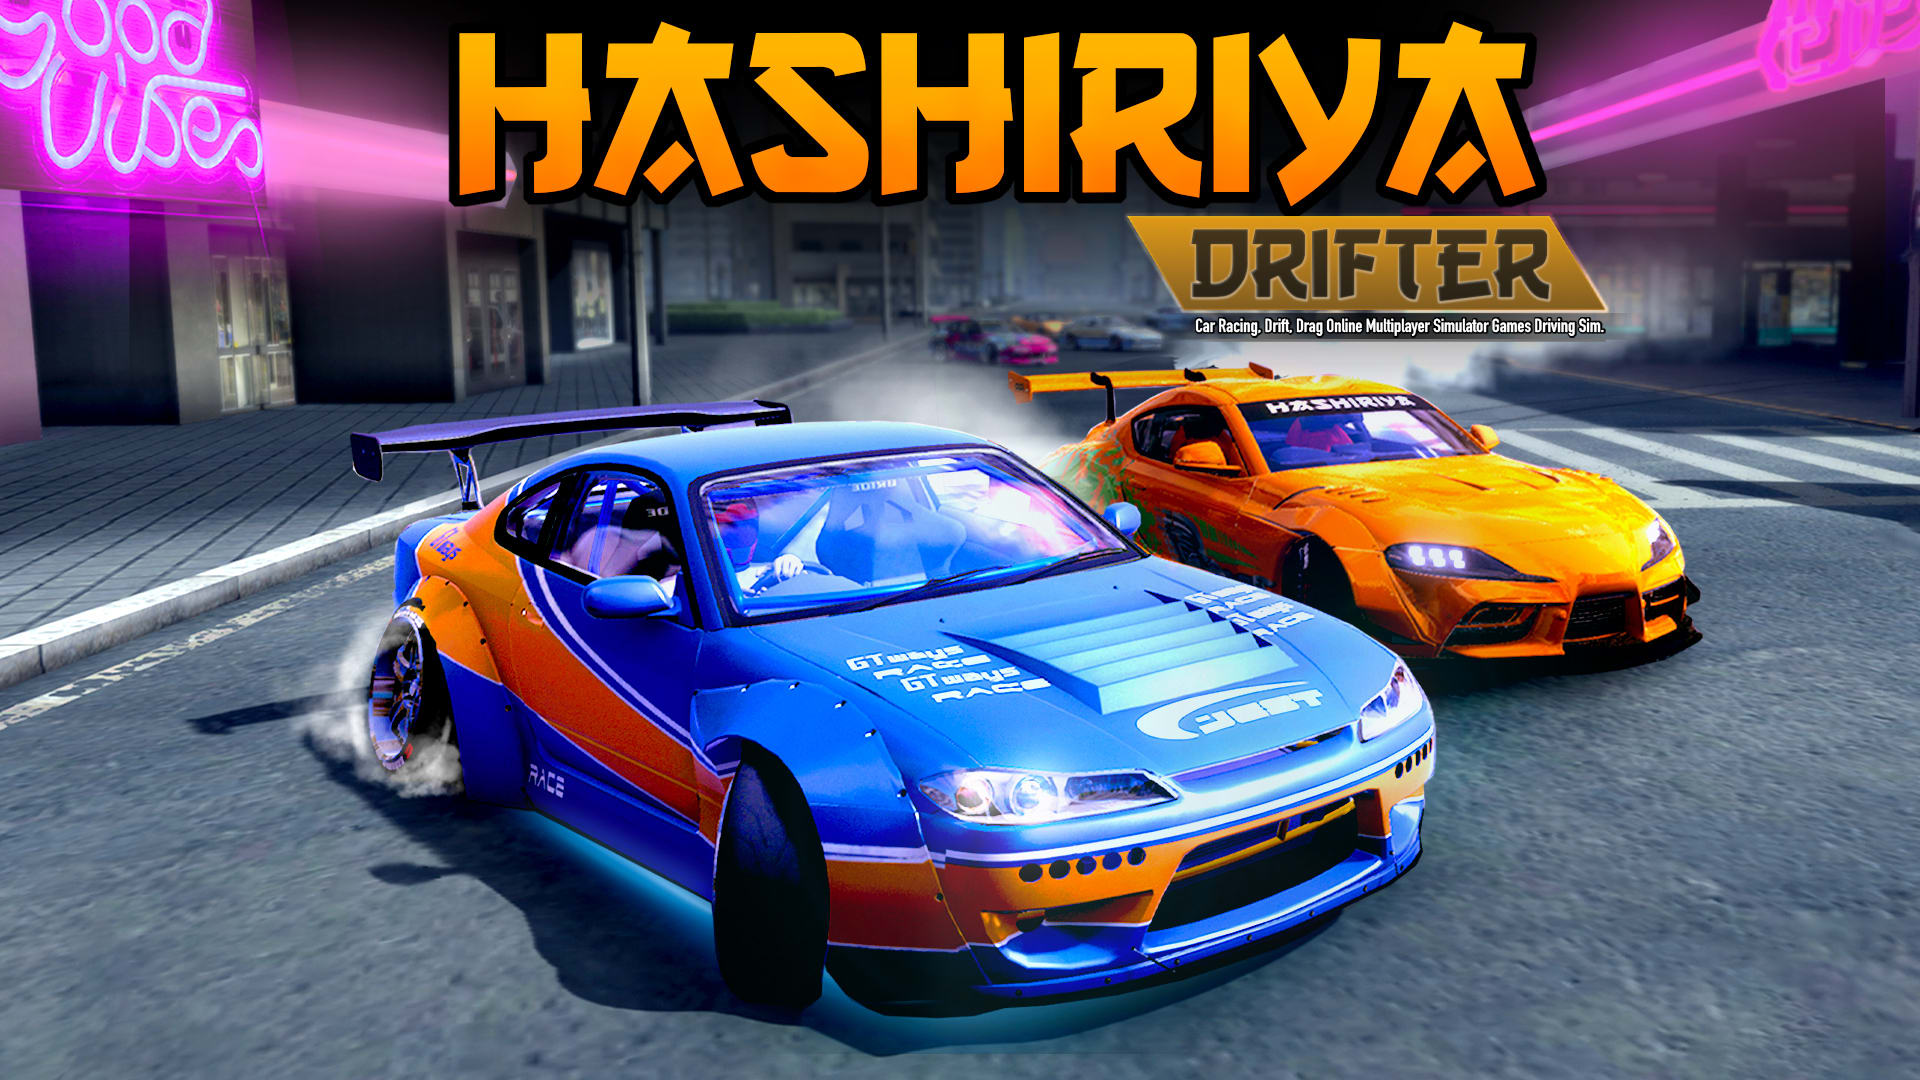 Hashiriya Drifter-Car Racing,Drift,Drag Online Multiplayer Simulator Games Driving Sim. 1